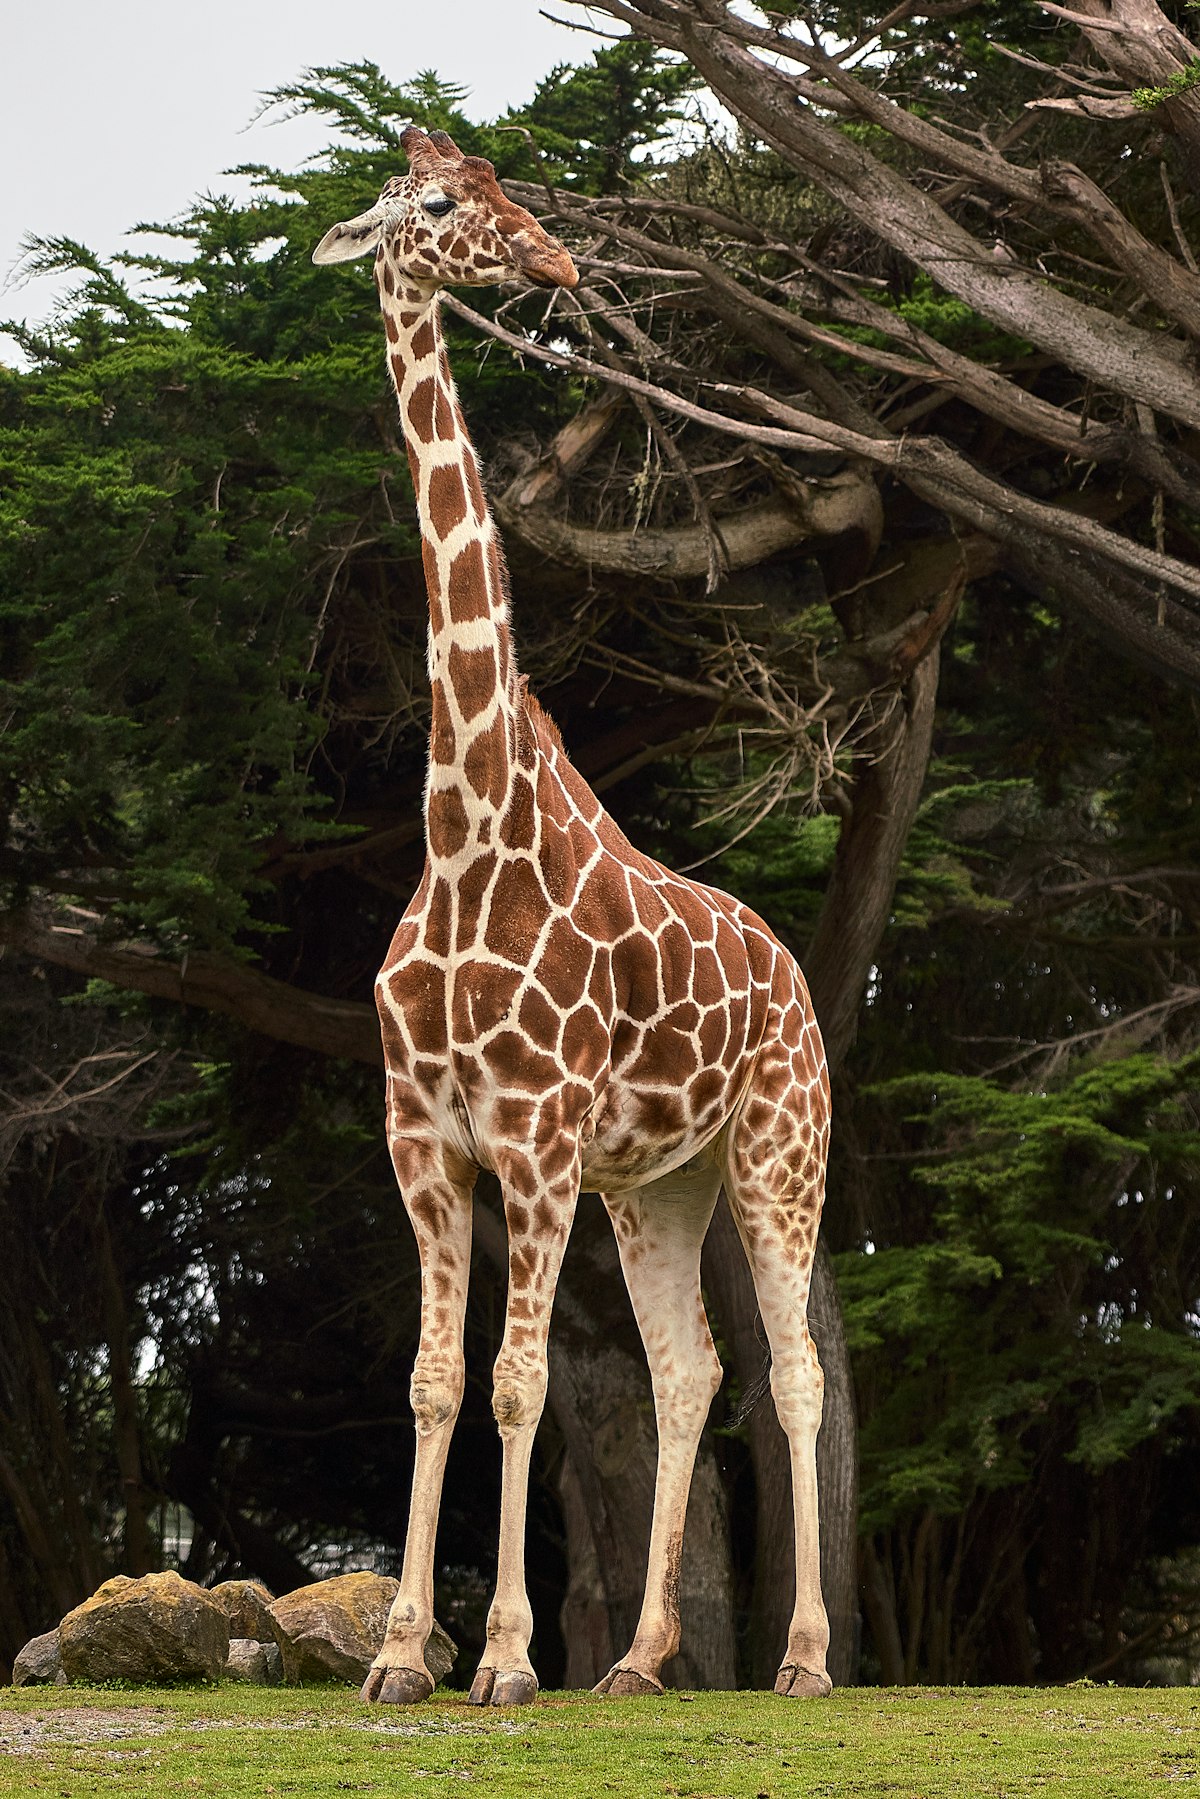 Encountering the Majestic Giraffe: My Safari Adventure in Africa